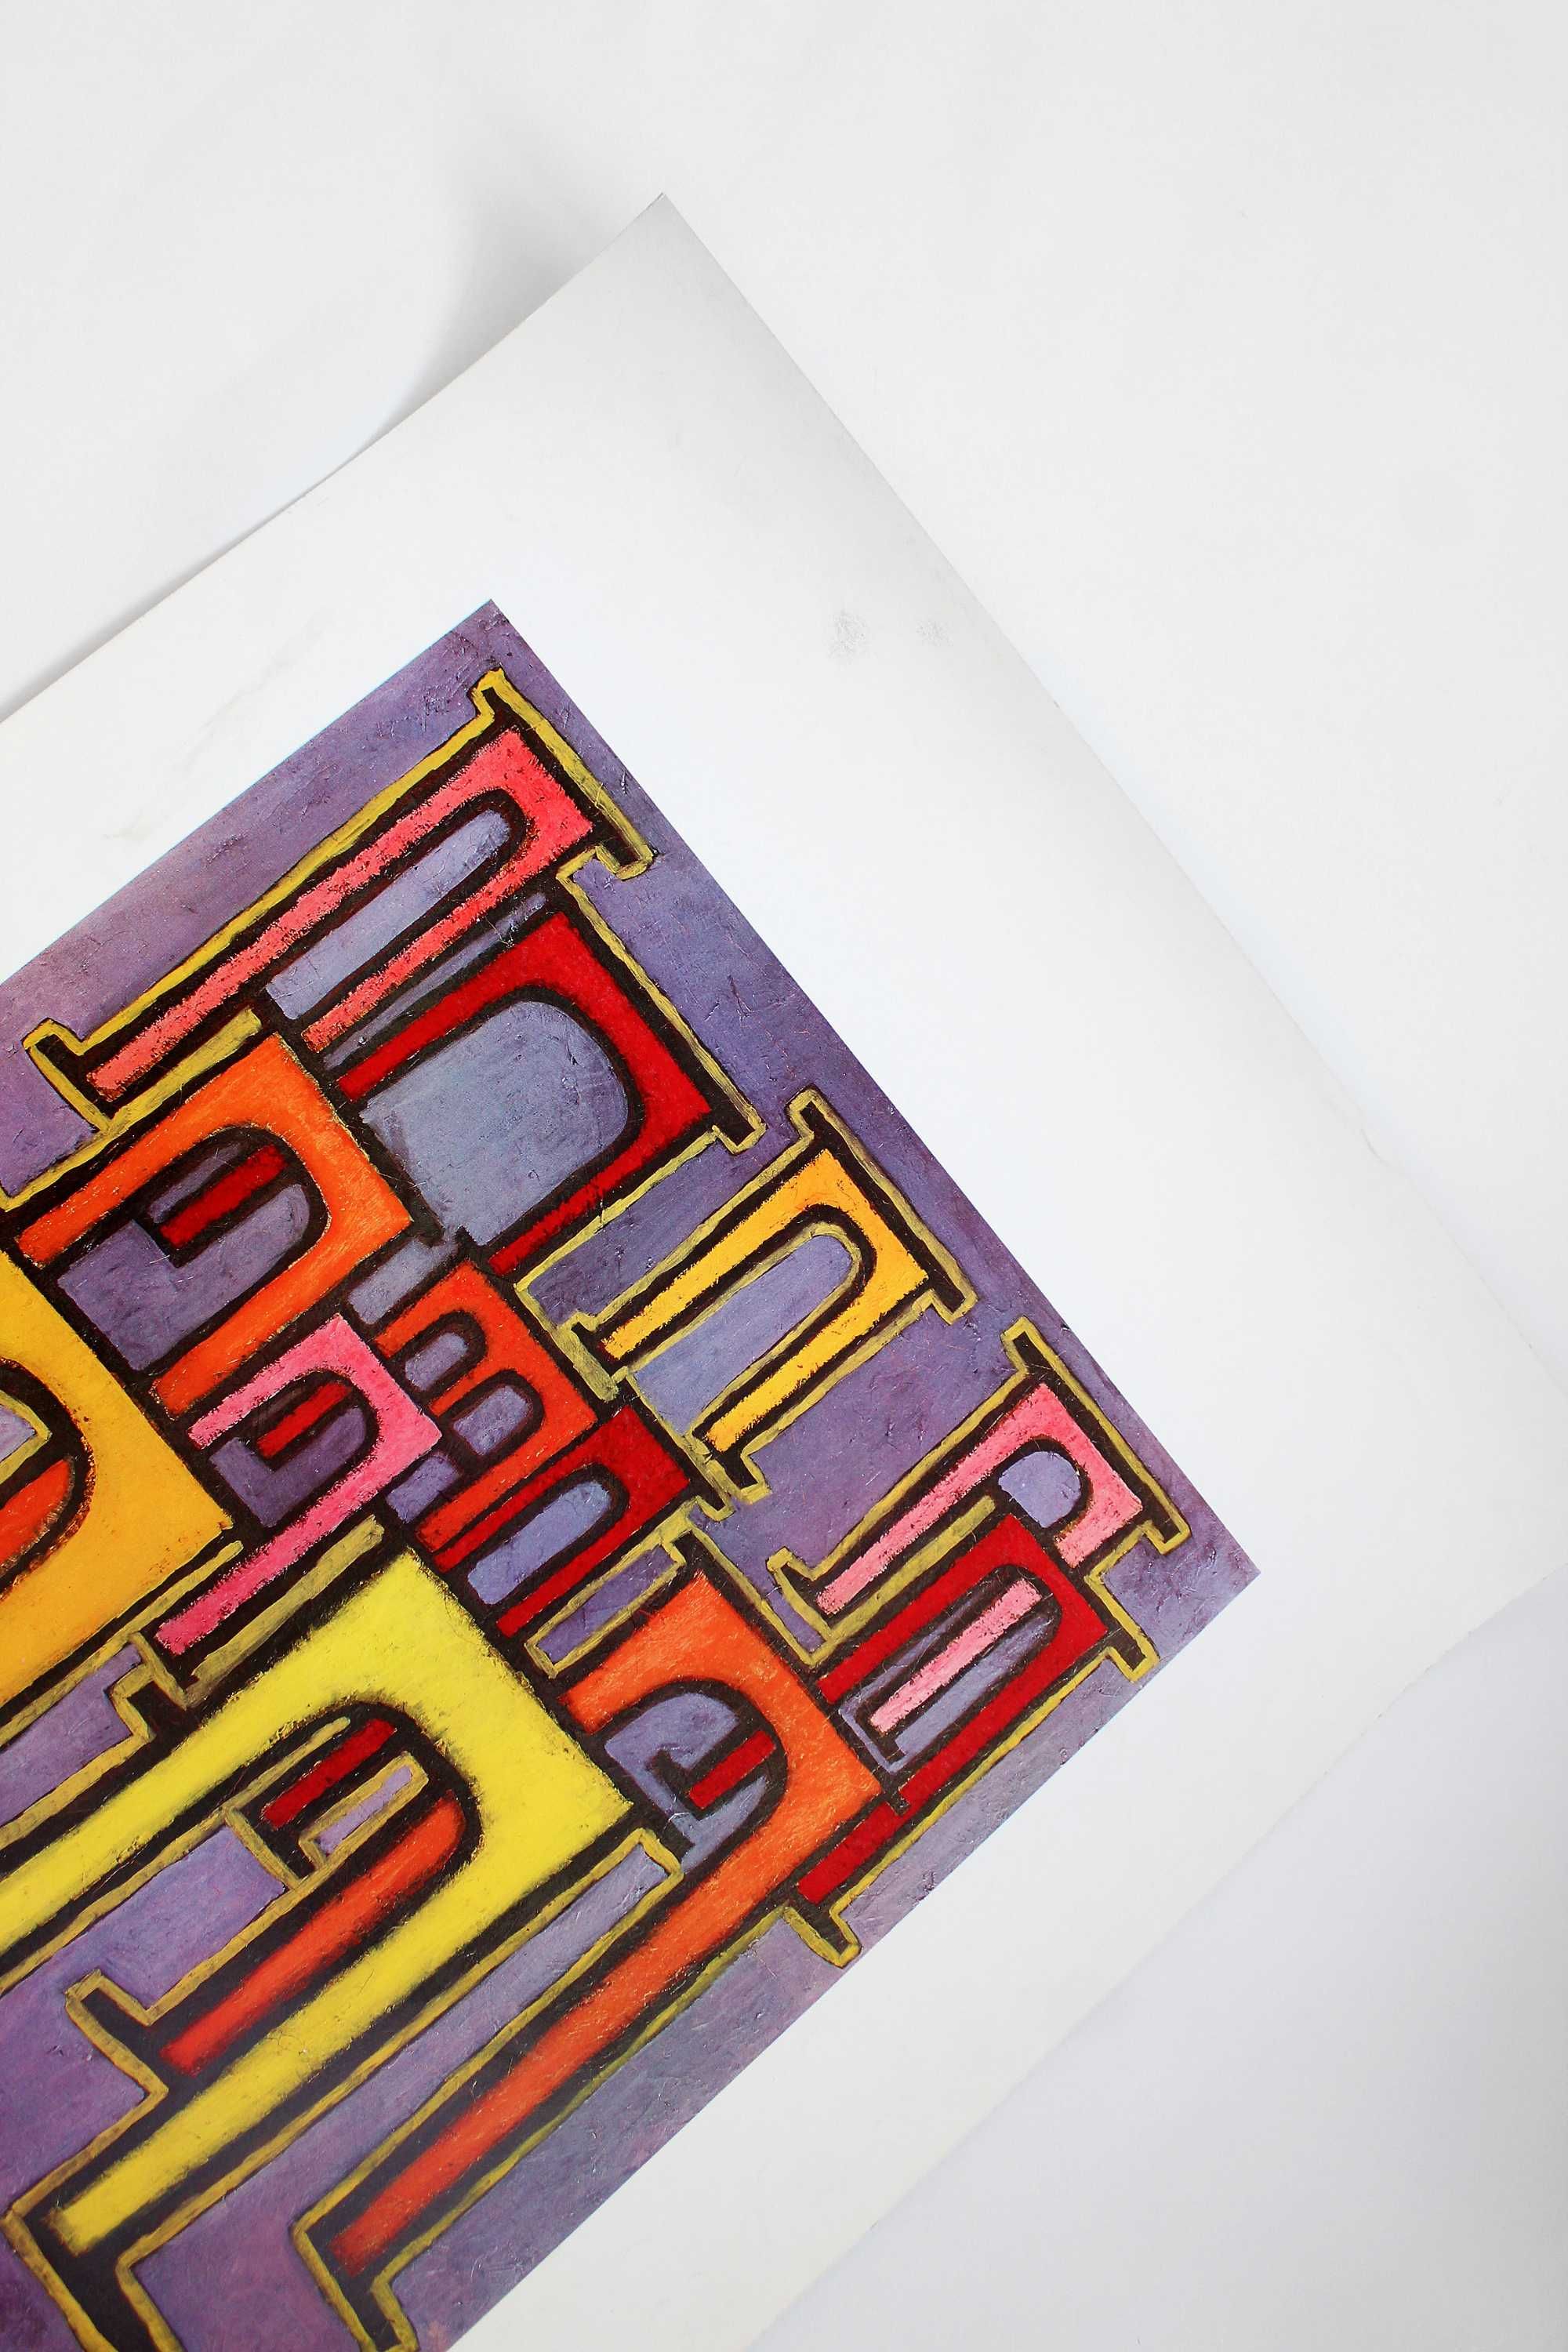 Paul Klee Revolution of the Viaduct arta print offset litografie 1969